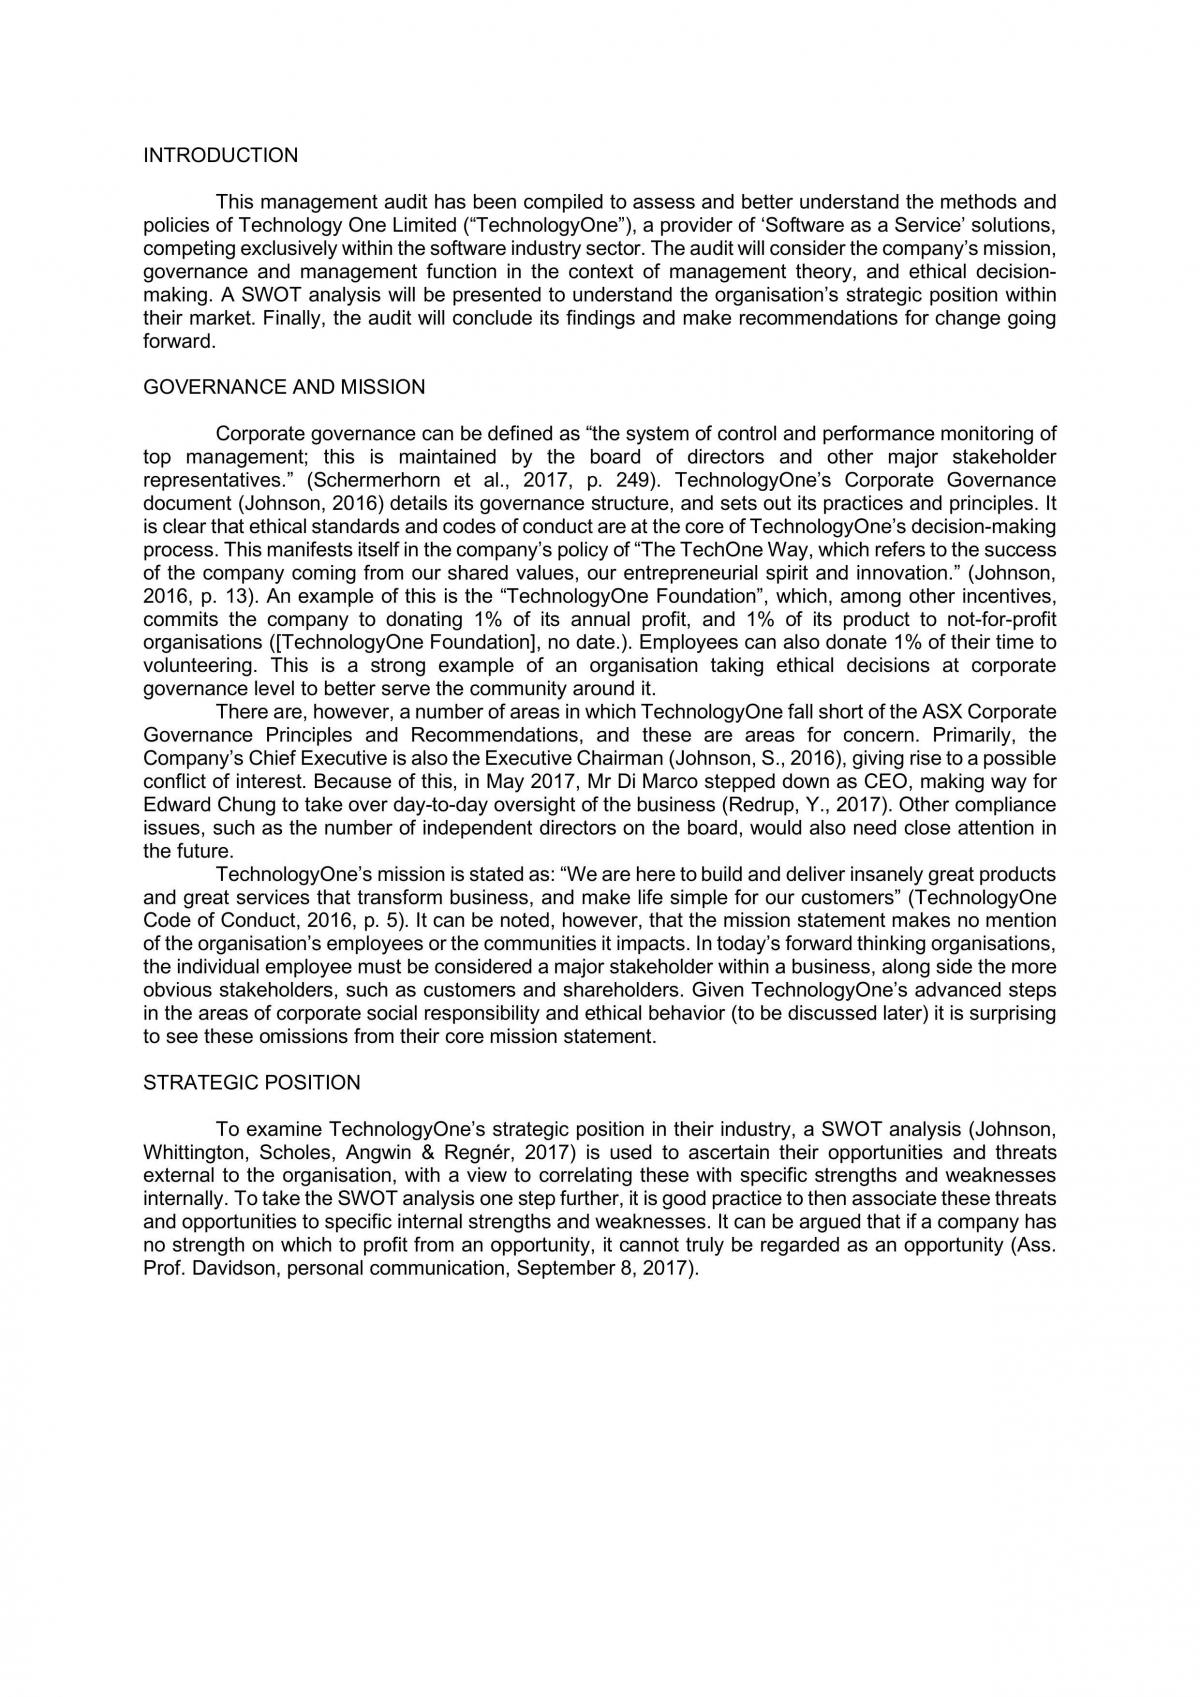 Assignment 3 - Management Audit - Page 2